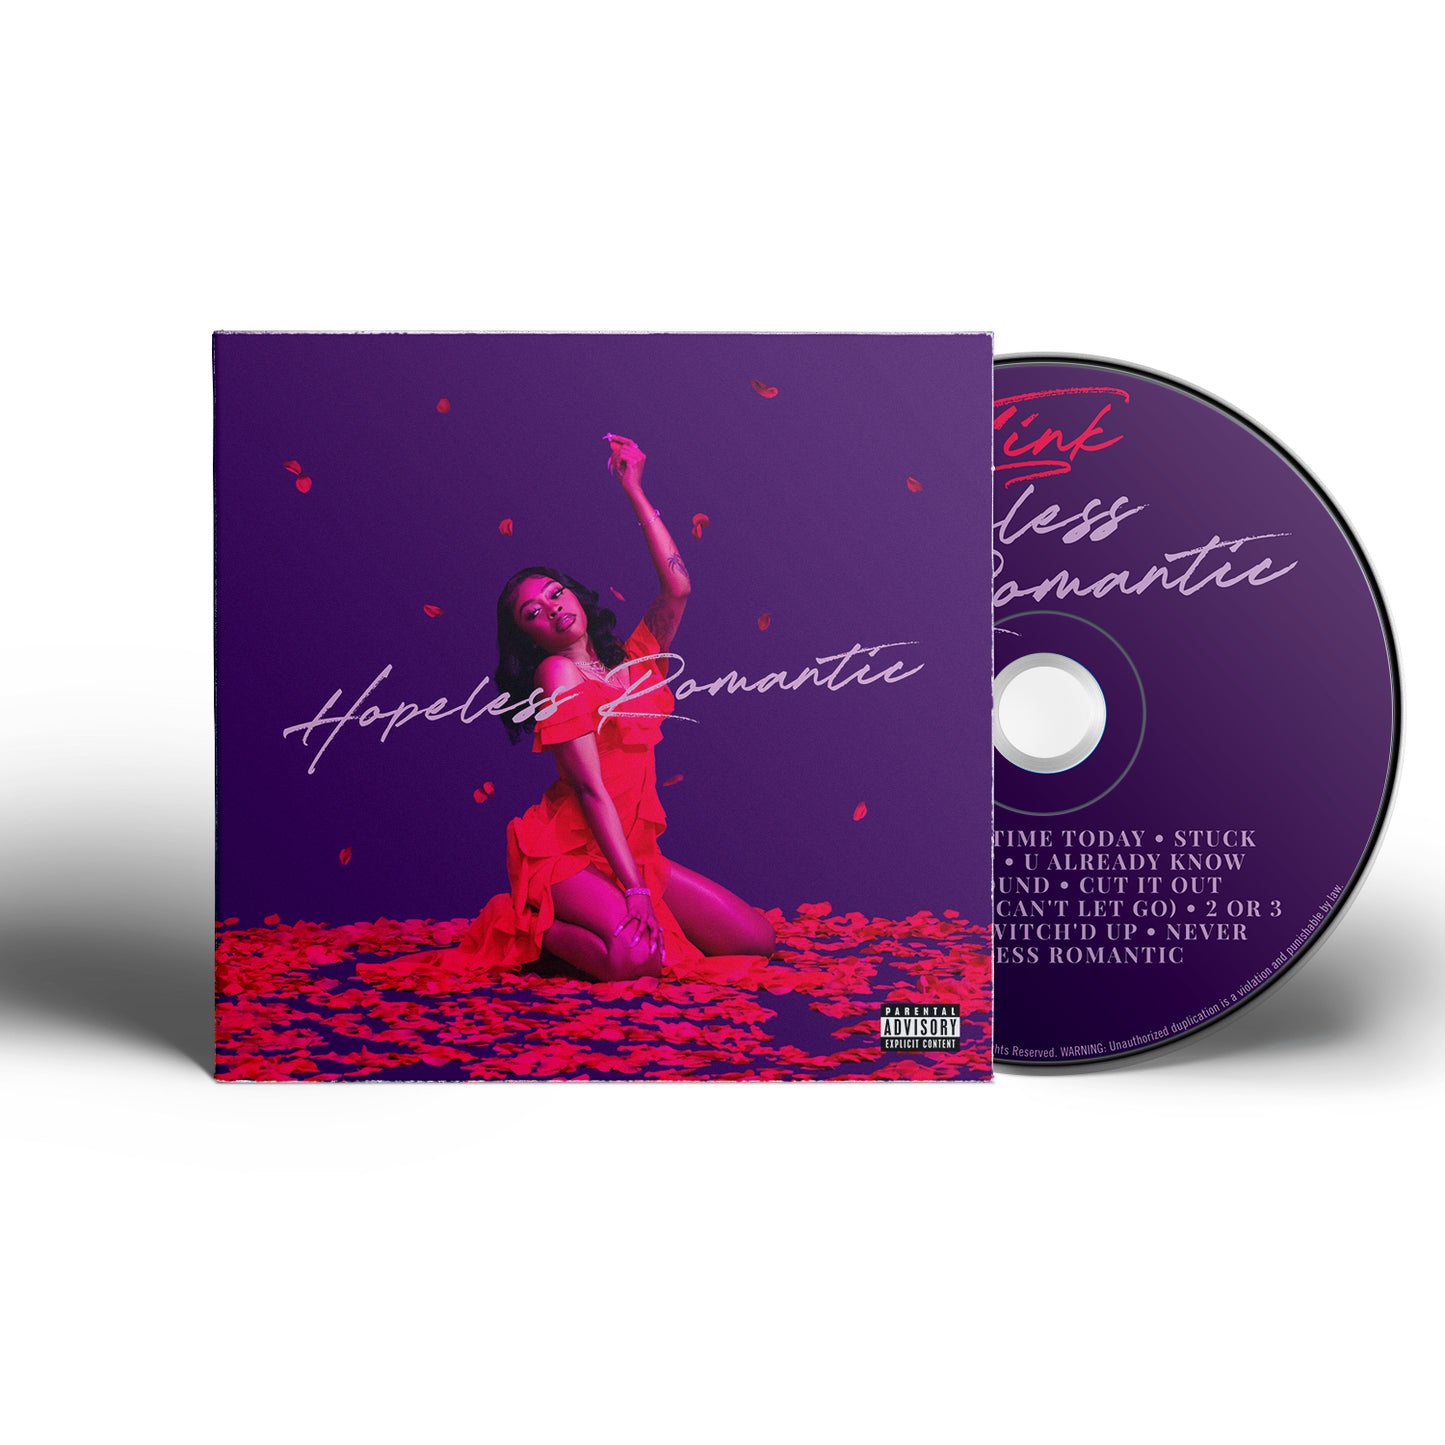 Hopeless Romantic - CD